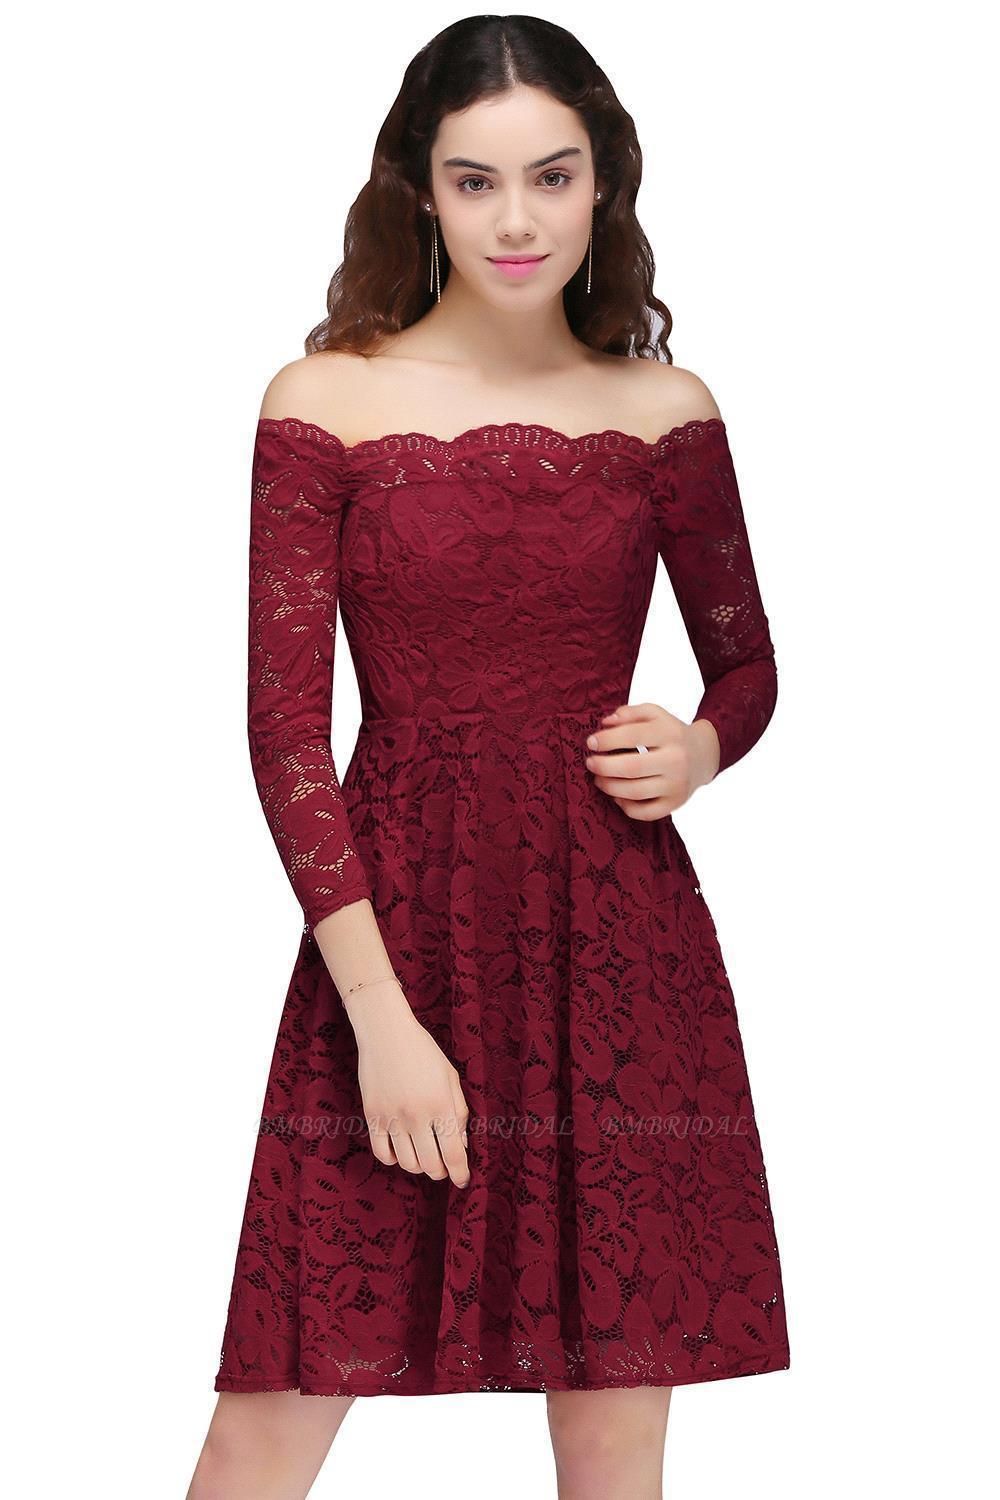 BMbridal A-Line Off-the-Shoulder Short Lace Burgundy Homecoming Dress